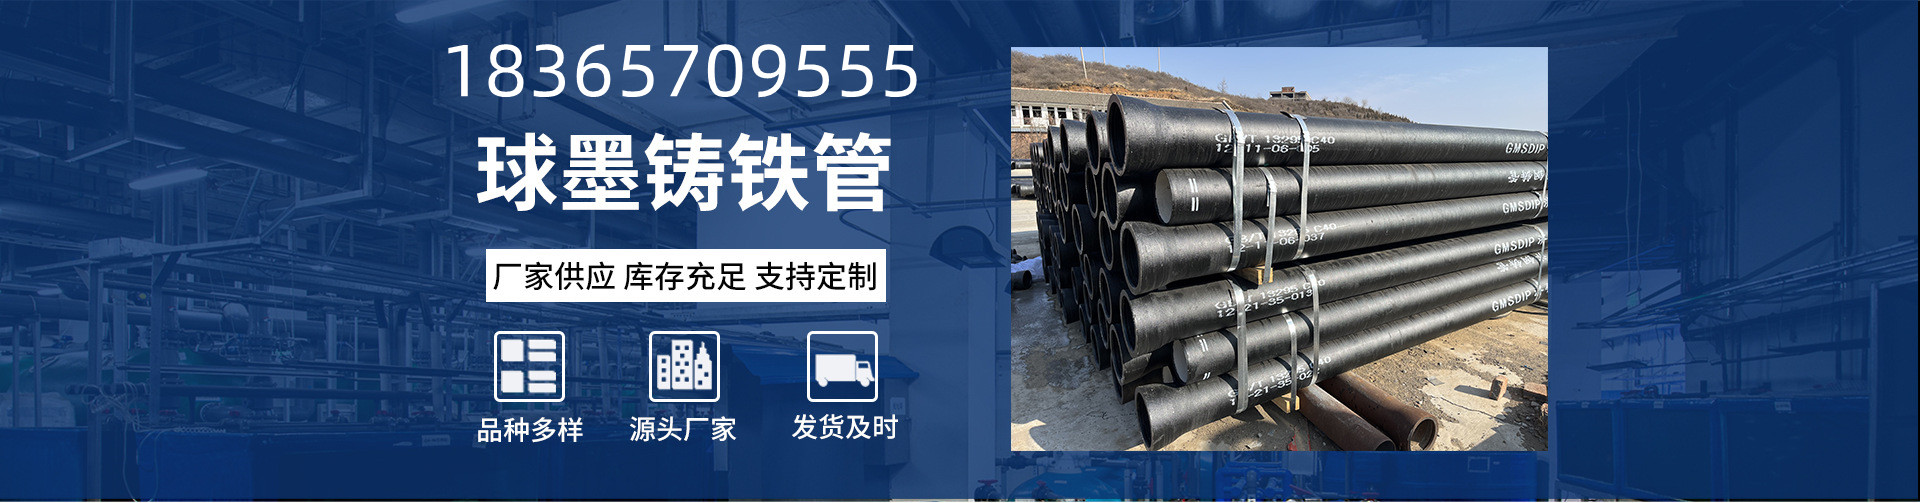 DN100柔性铸铁排污管、台湾本地DN100柔性铸铁排污管、台湾、台湾DN100柔性铸铁排污管